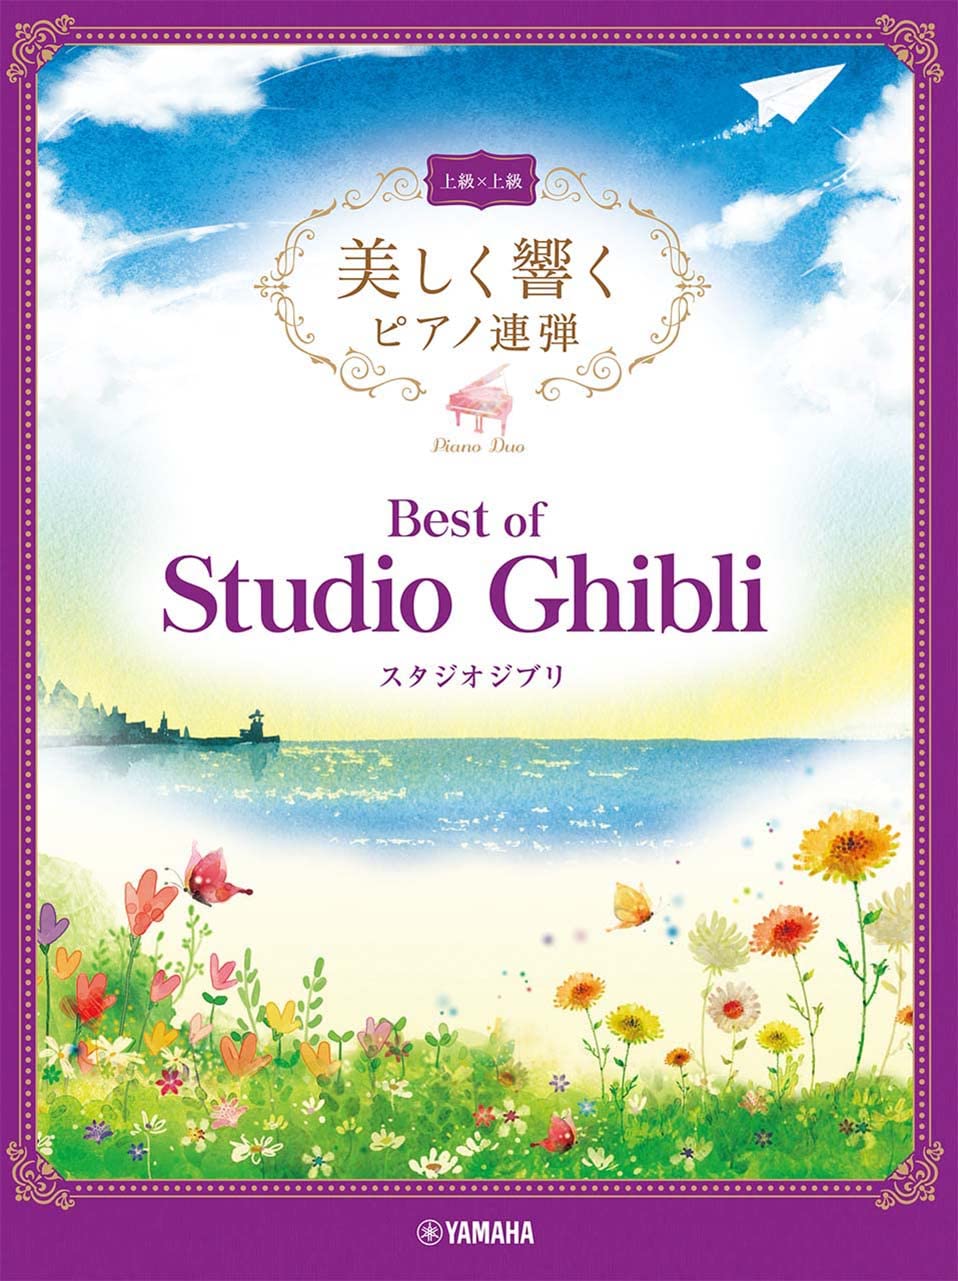 Impressive piano duet: Best of Studio Ghibli (Advanced x Advanced)